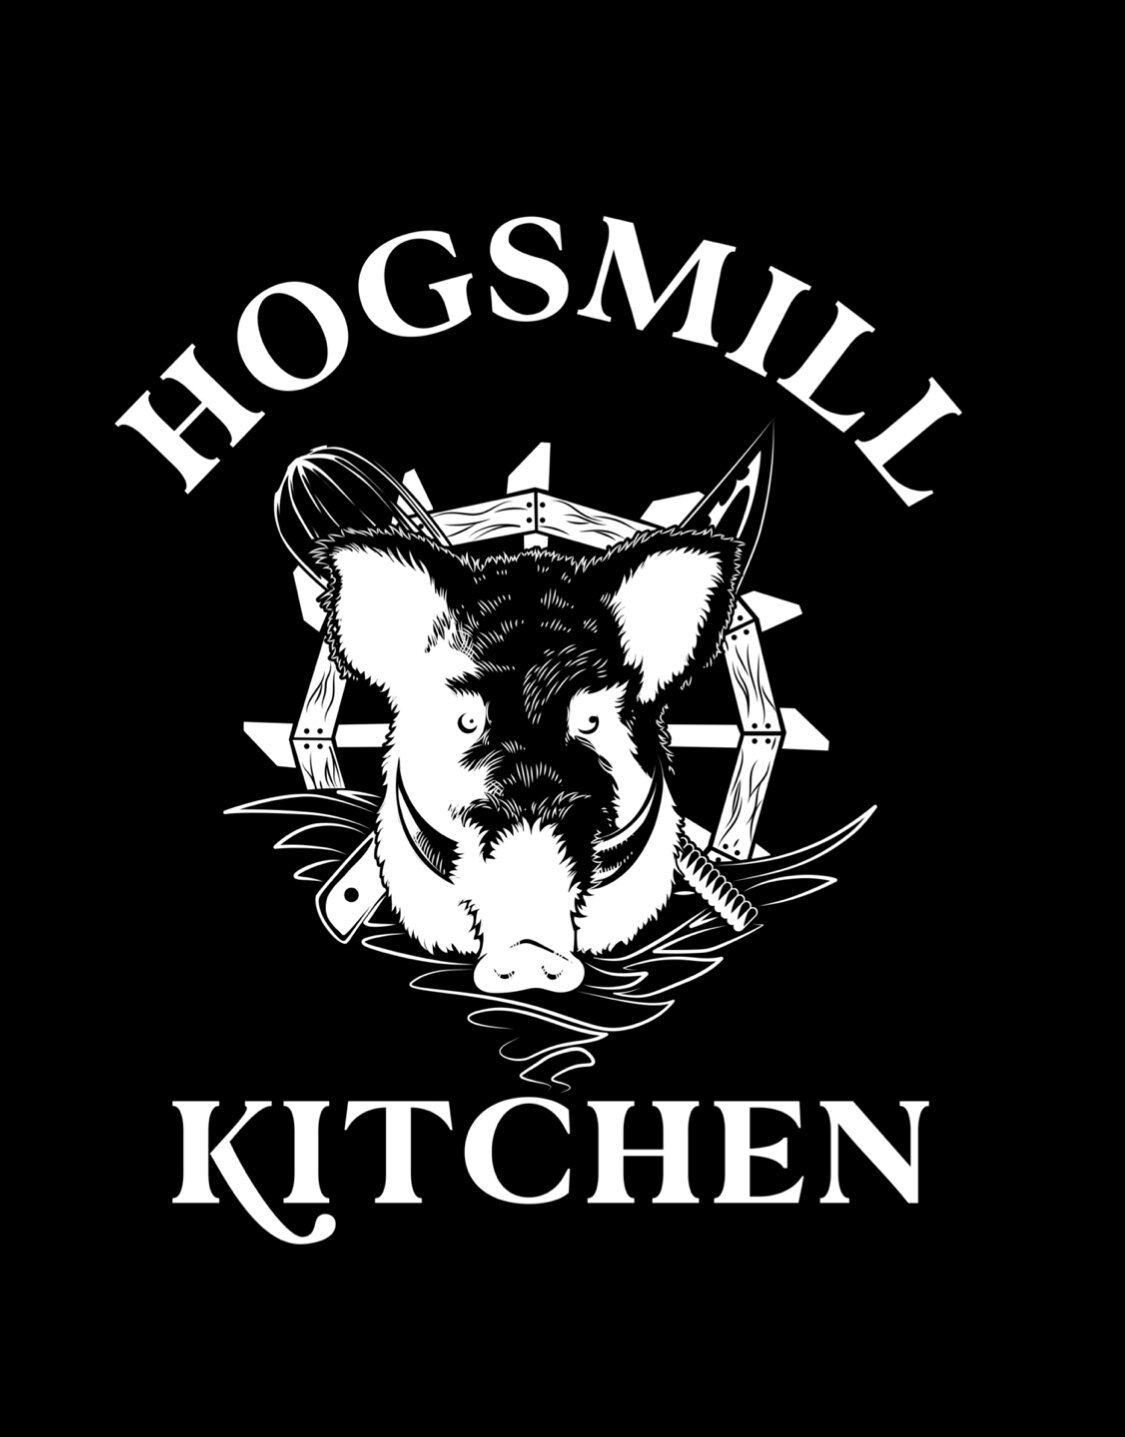 Hogsmill Kitchen